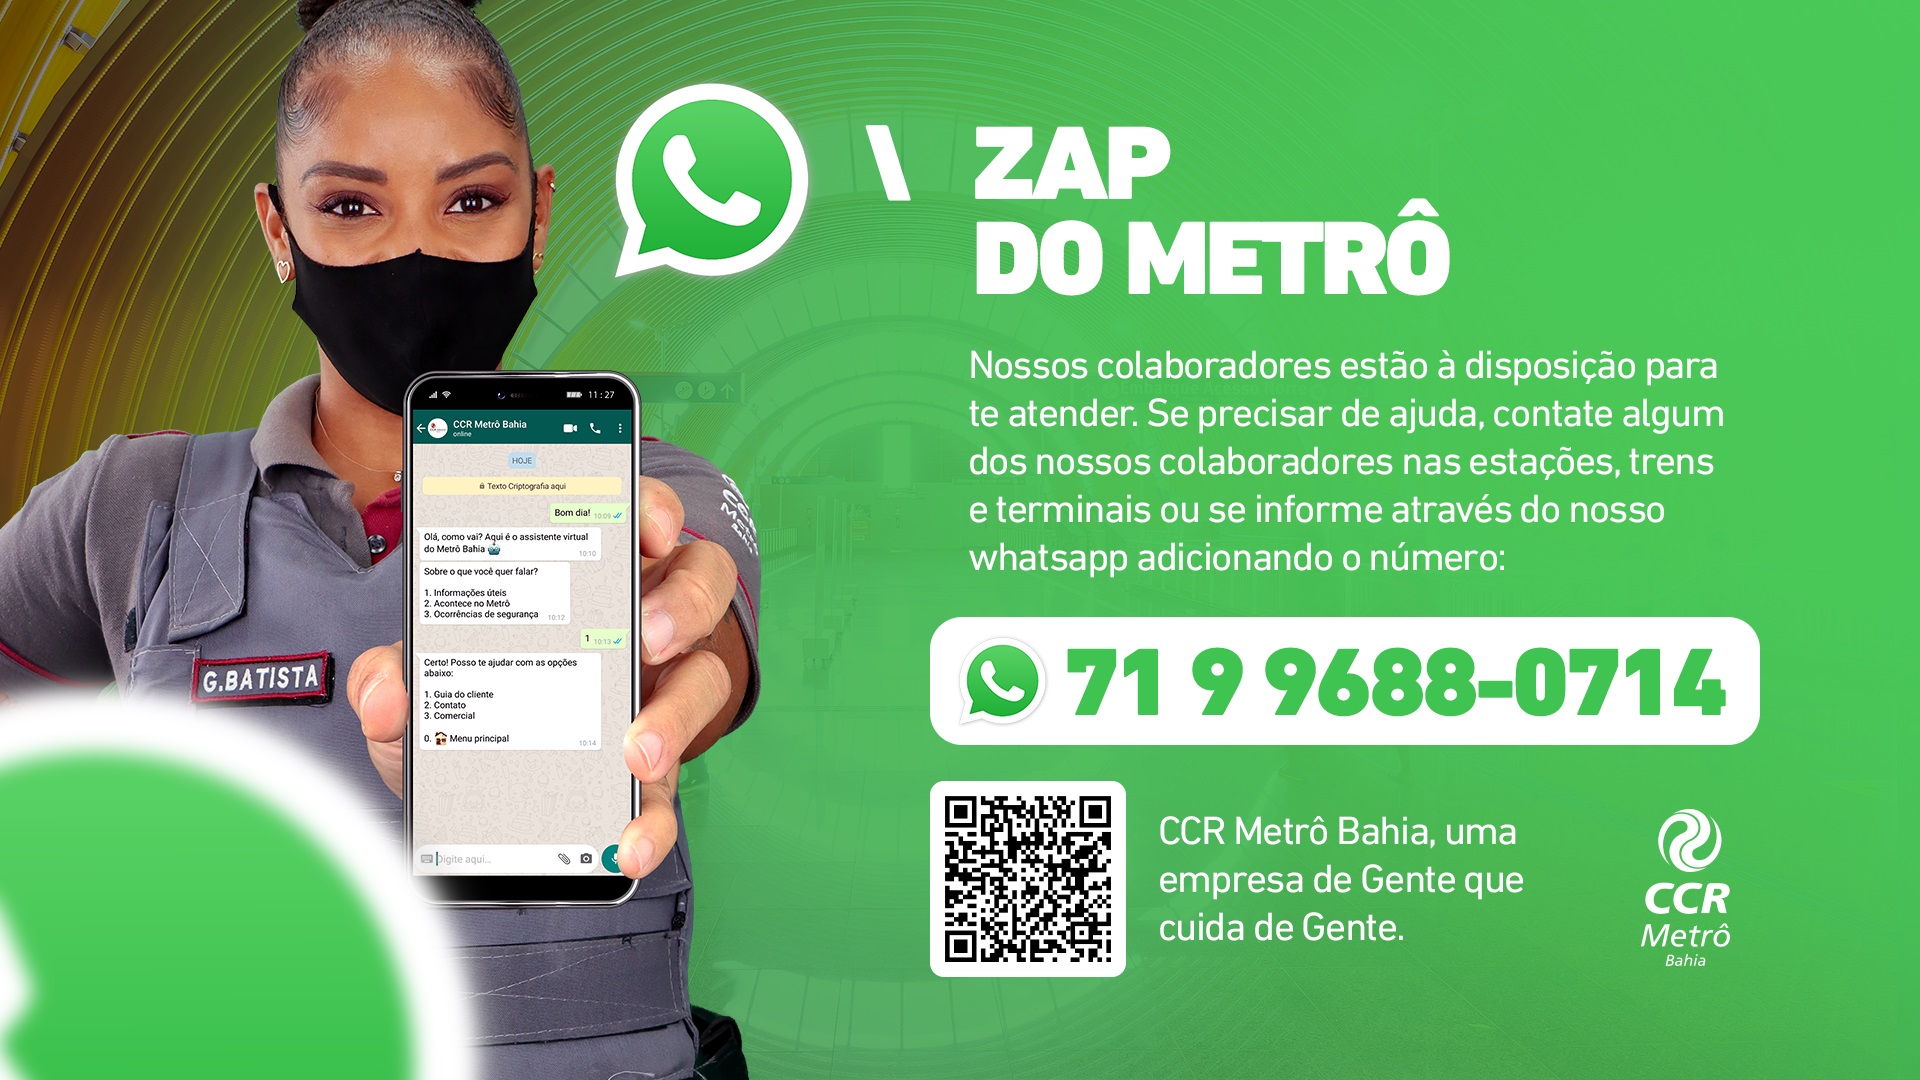 CCR Metrô Bahia launches WhatsApp service - ANPTrilhos